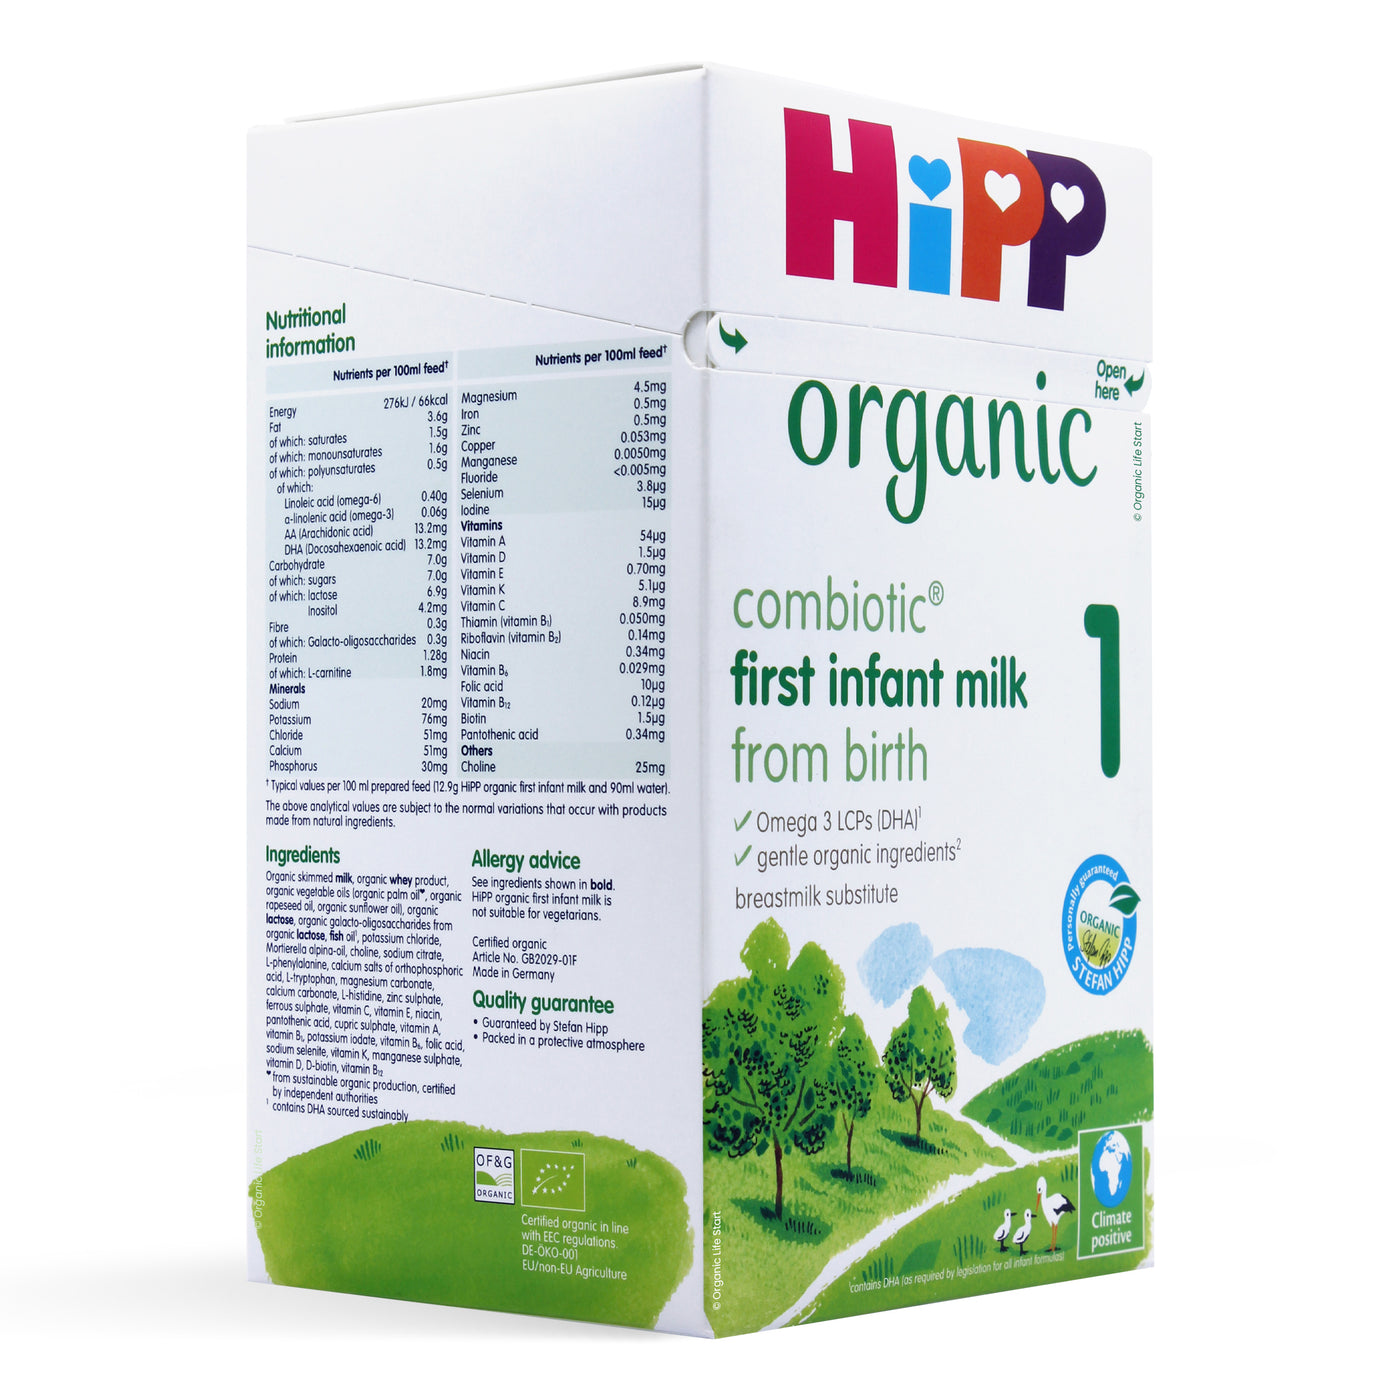 HiPP 1 Organic Combiotic First Infant Milk, 800g